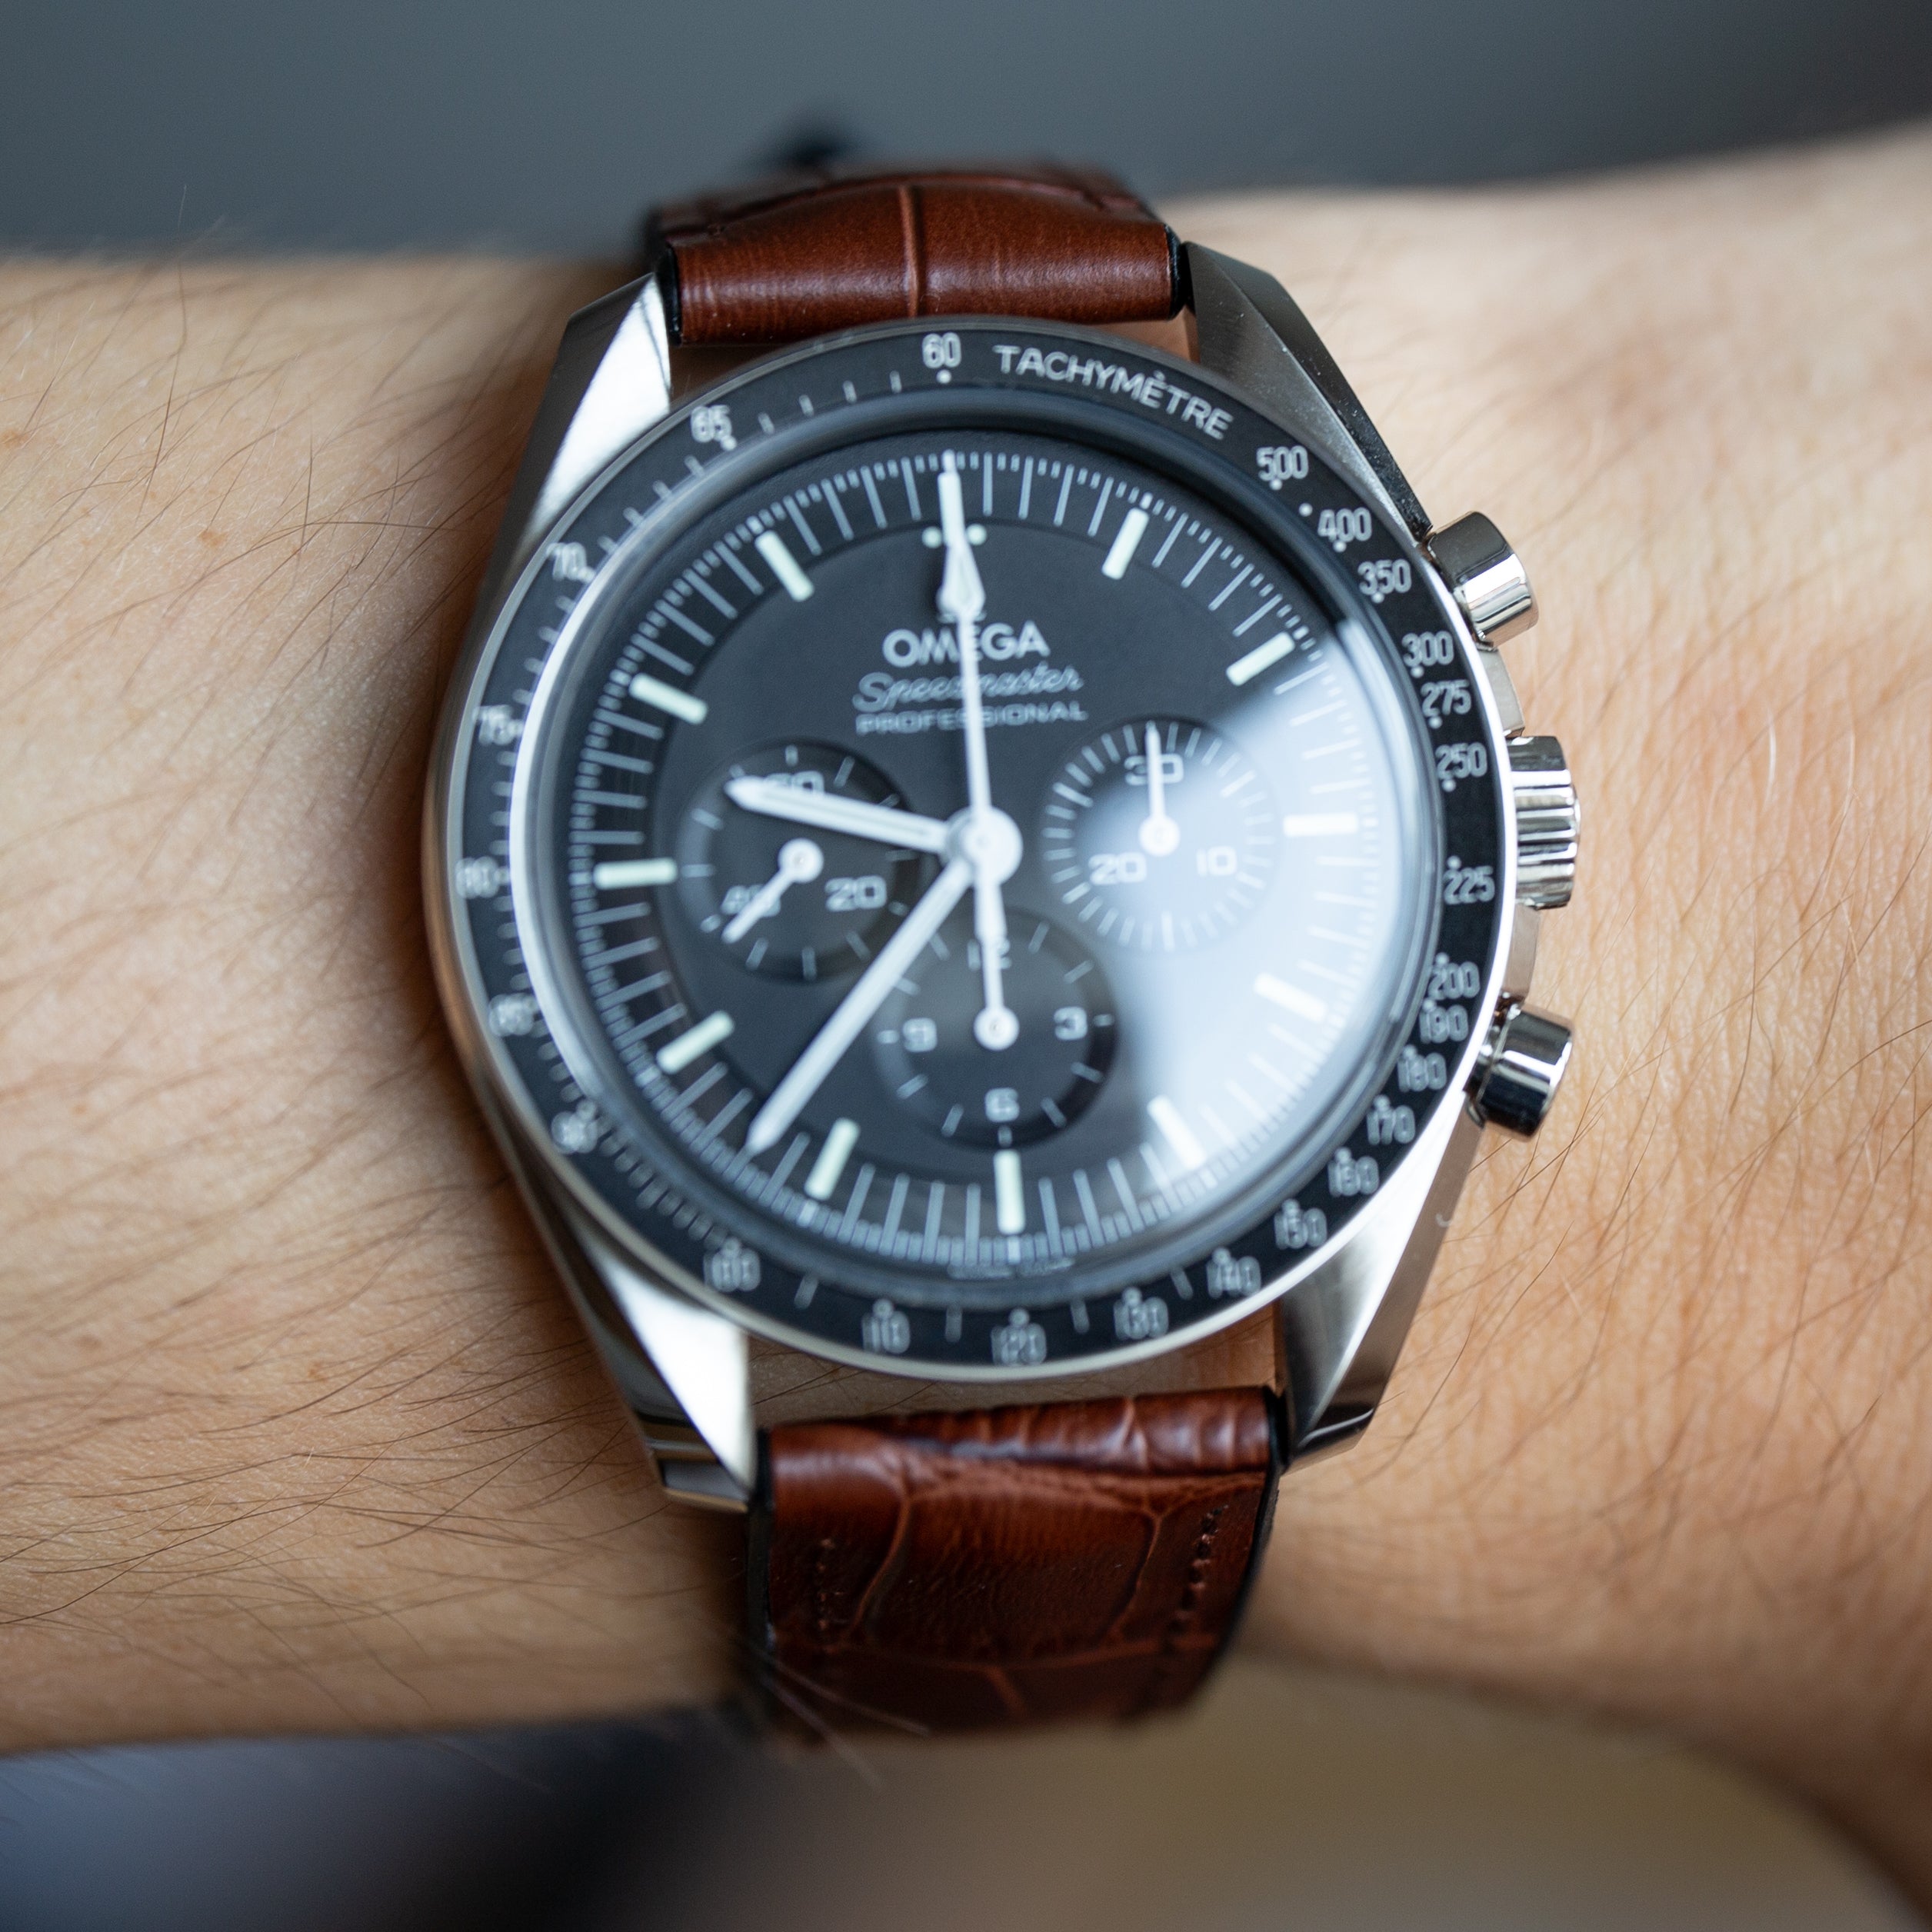 Speedmaster Italian Leather Watch Strap Brown